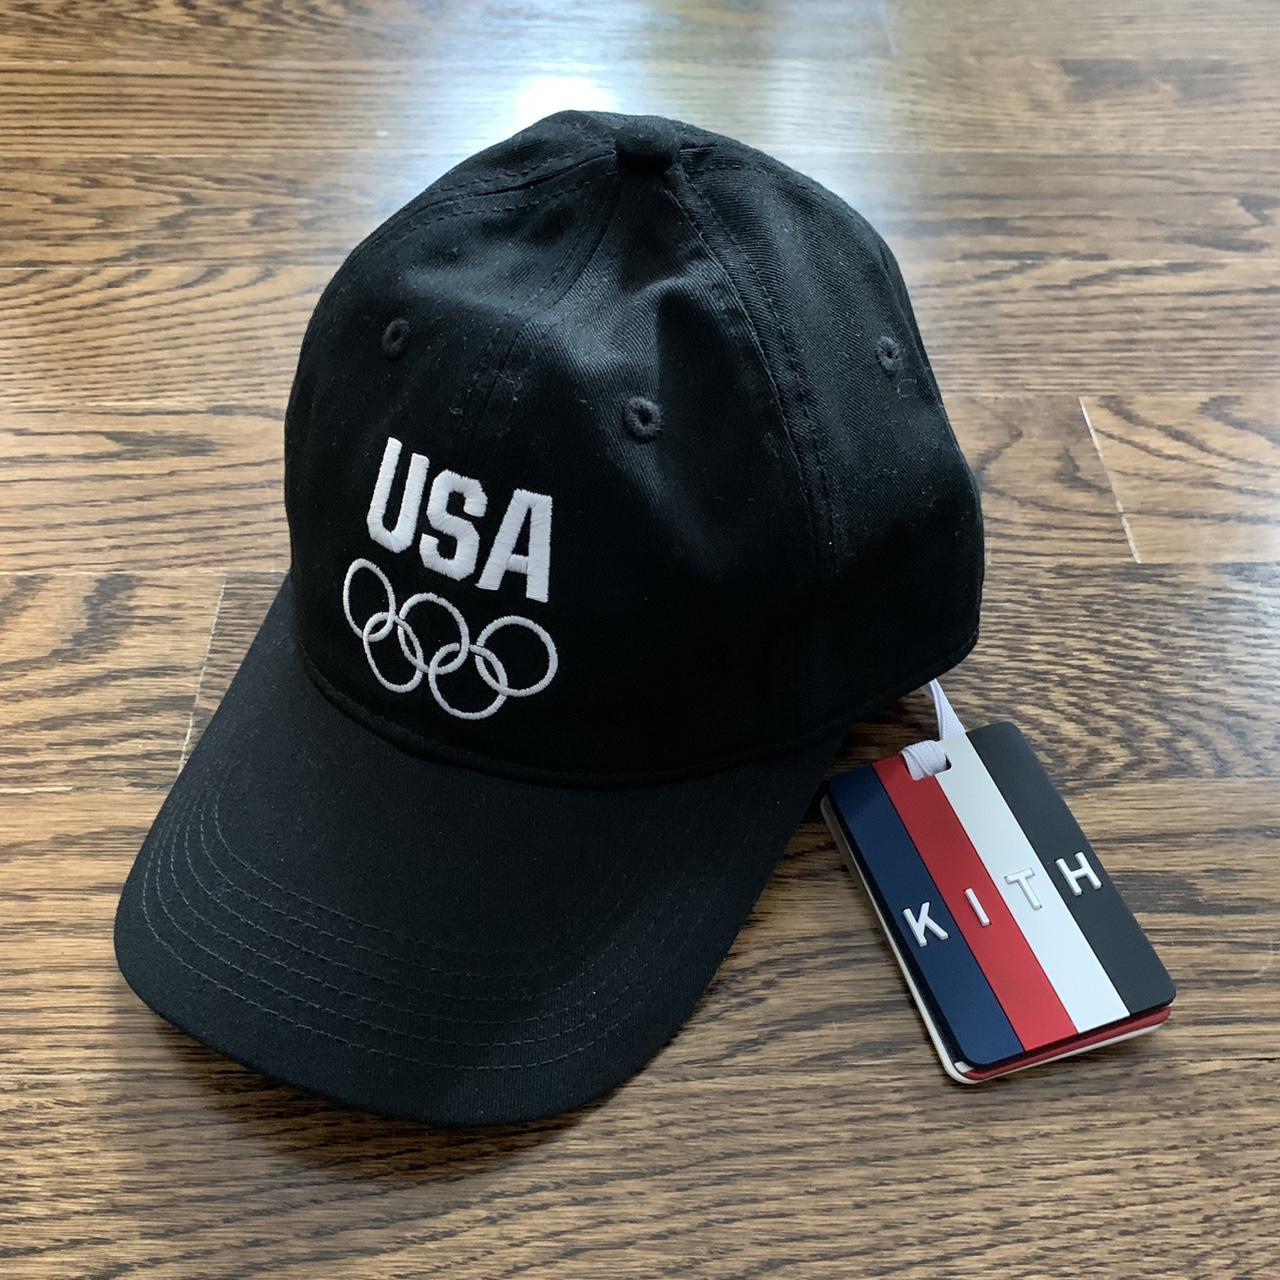 KITH Team USA Black Dad Hat. Adjustable strap with... - Depop